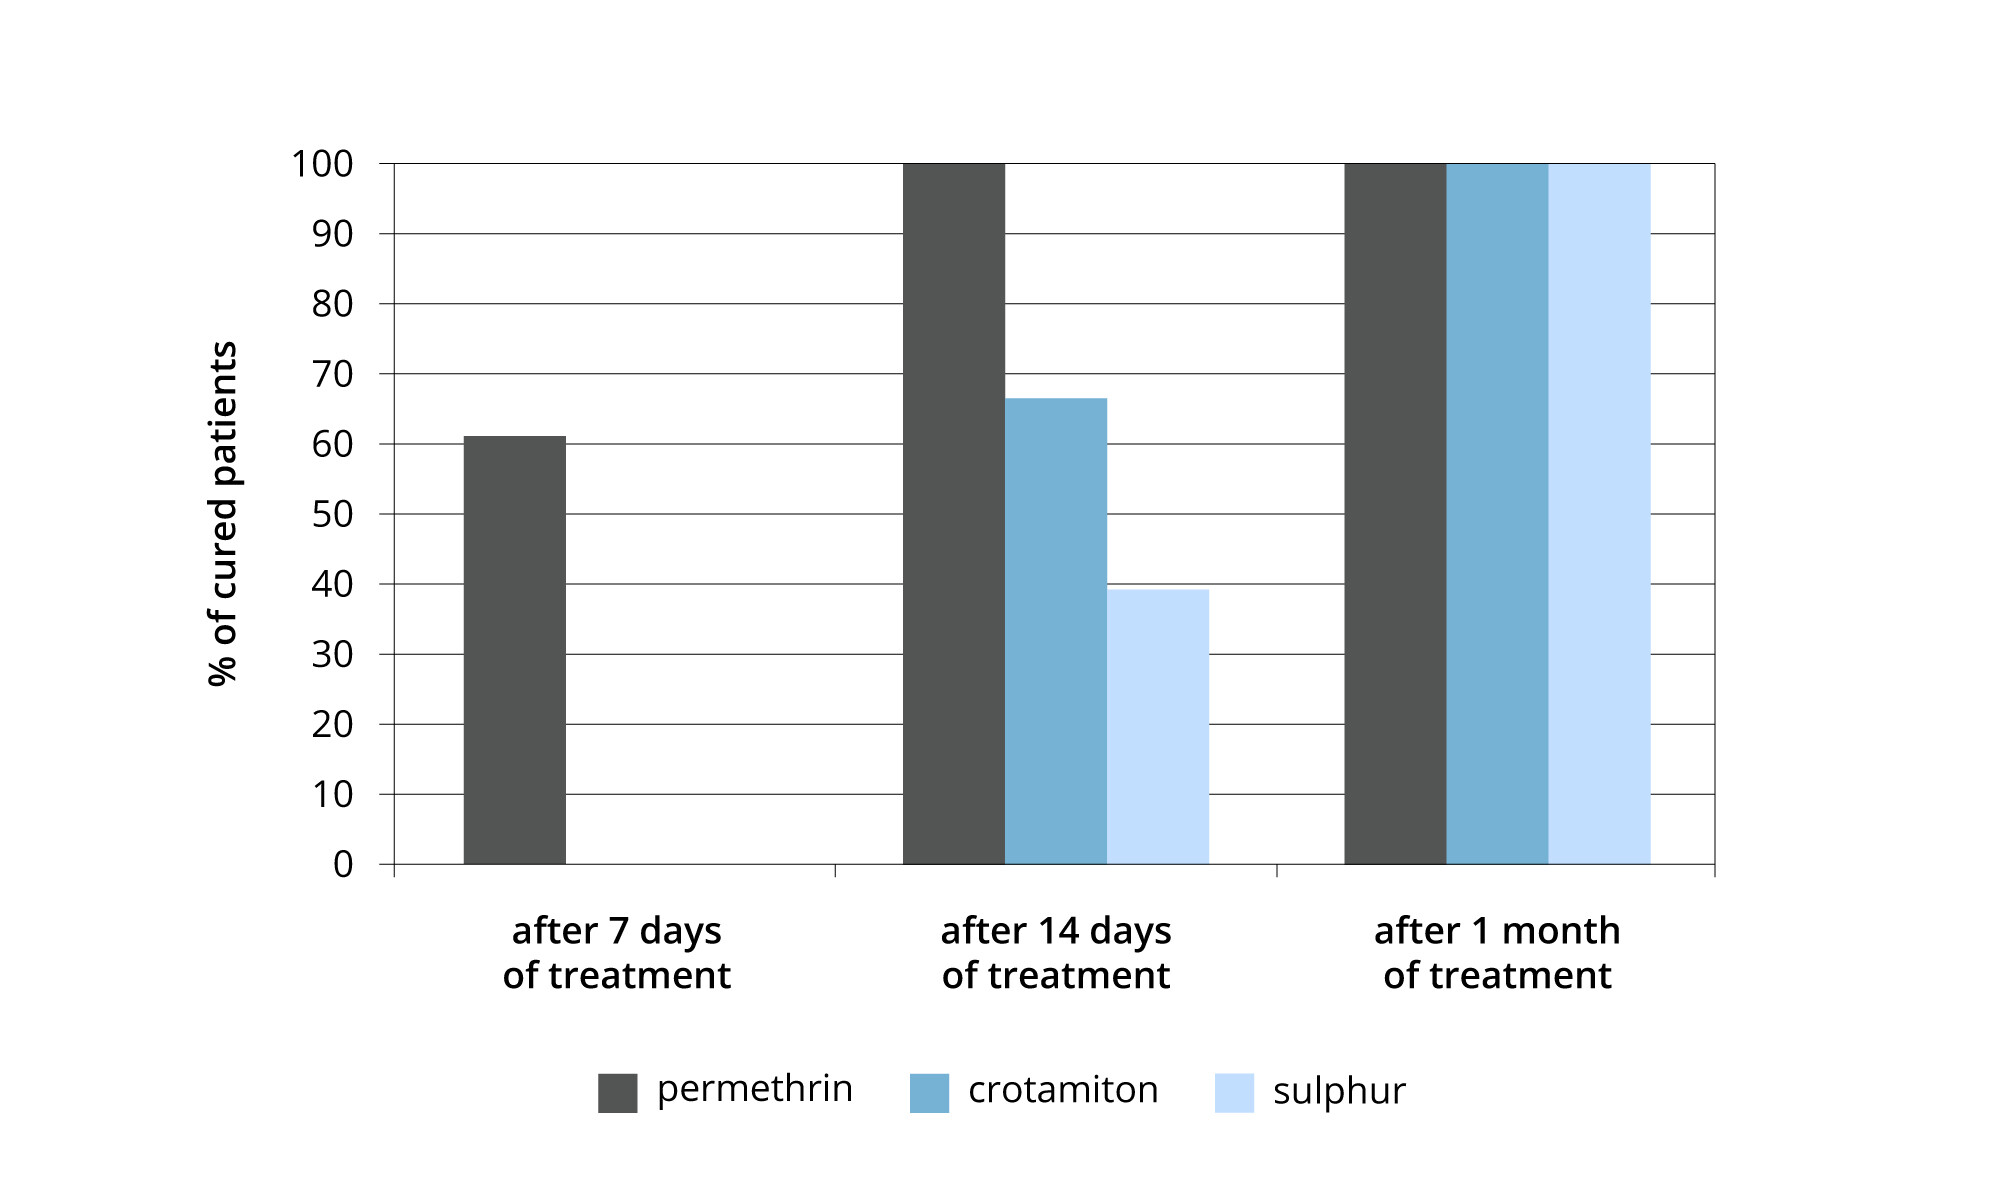 Permethrin 7-30 days treatment